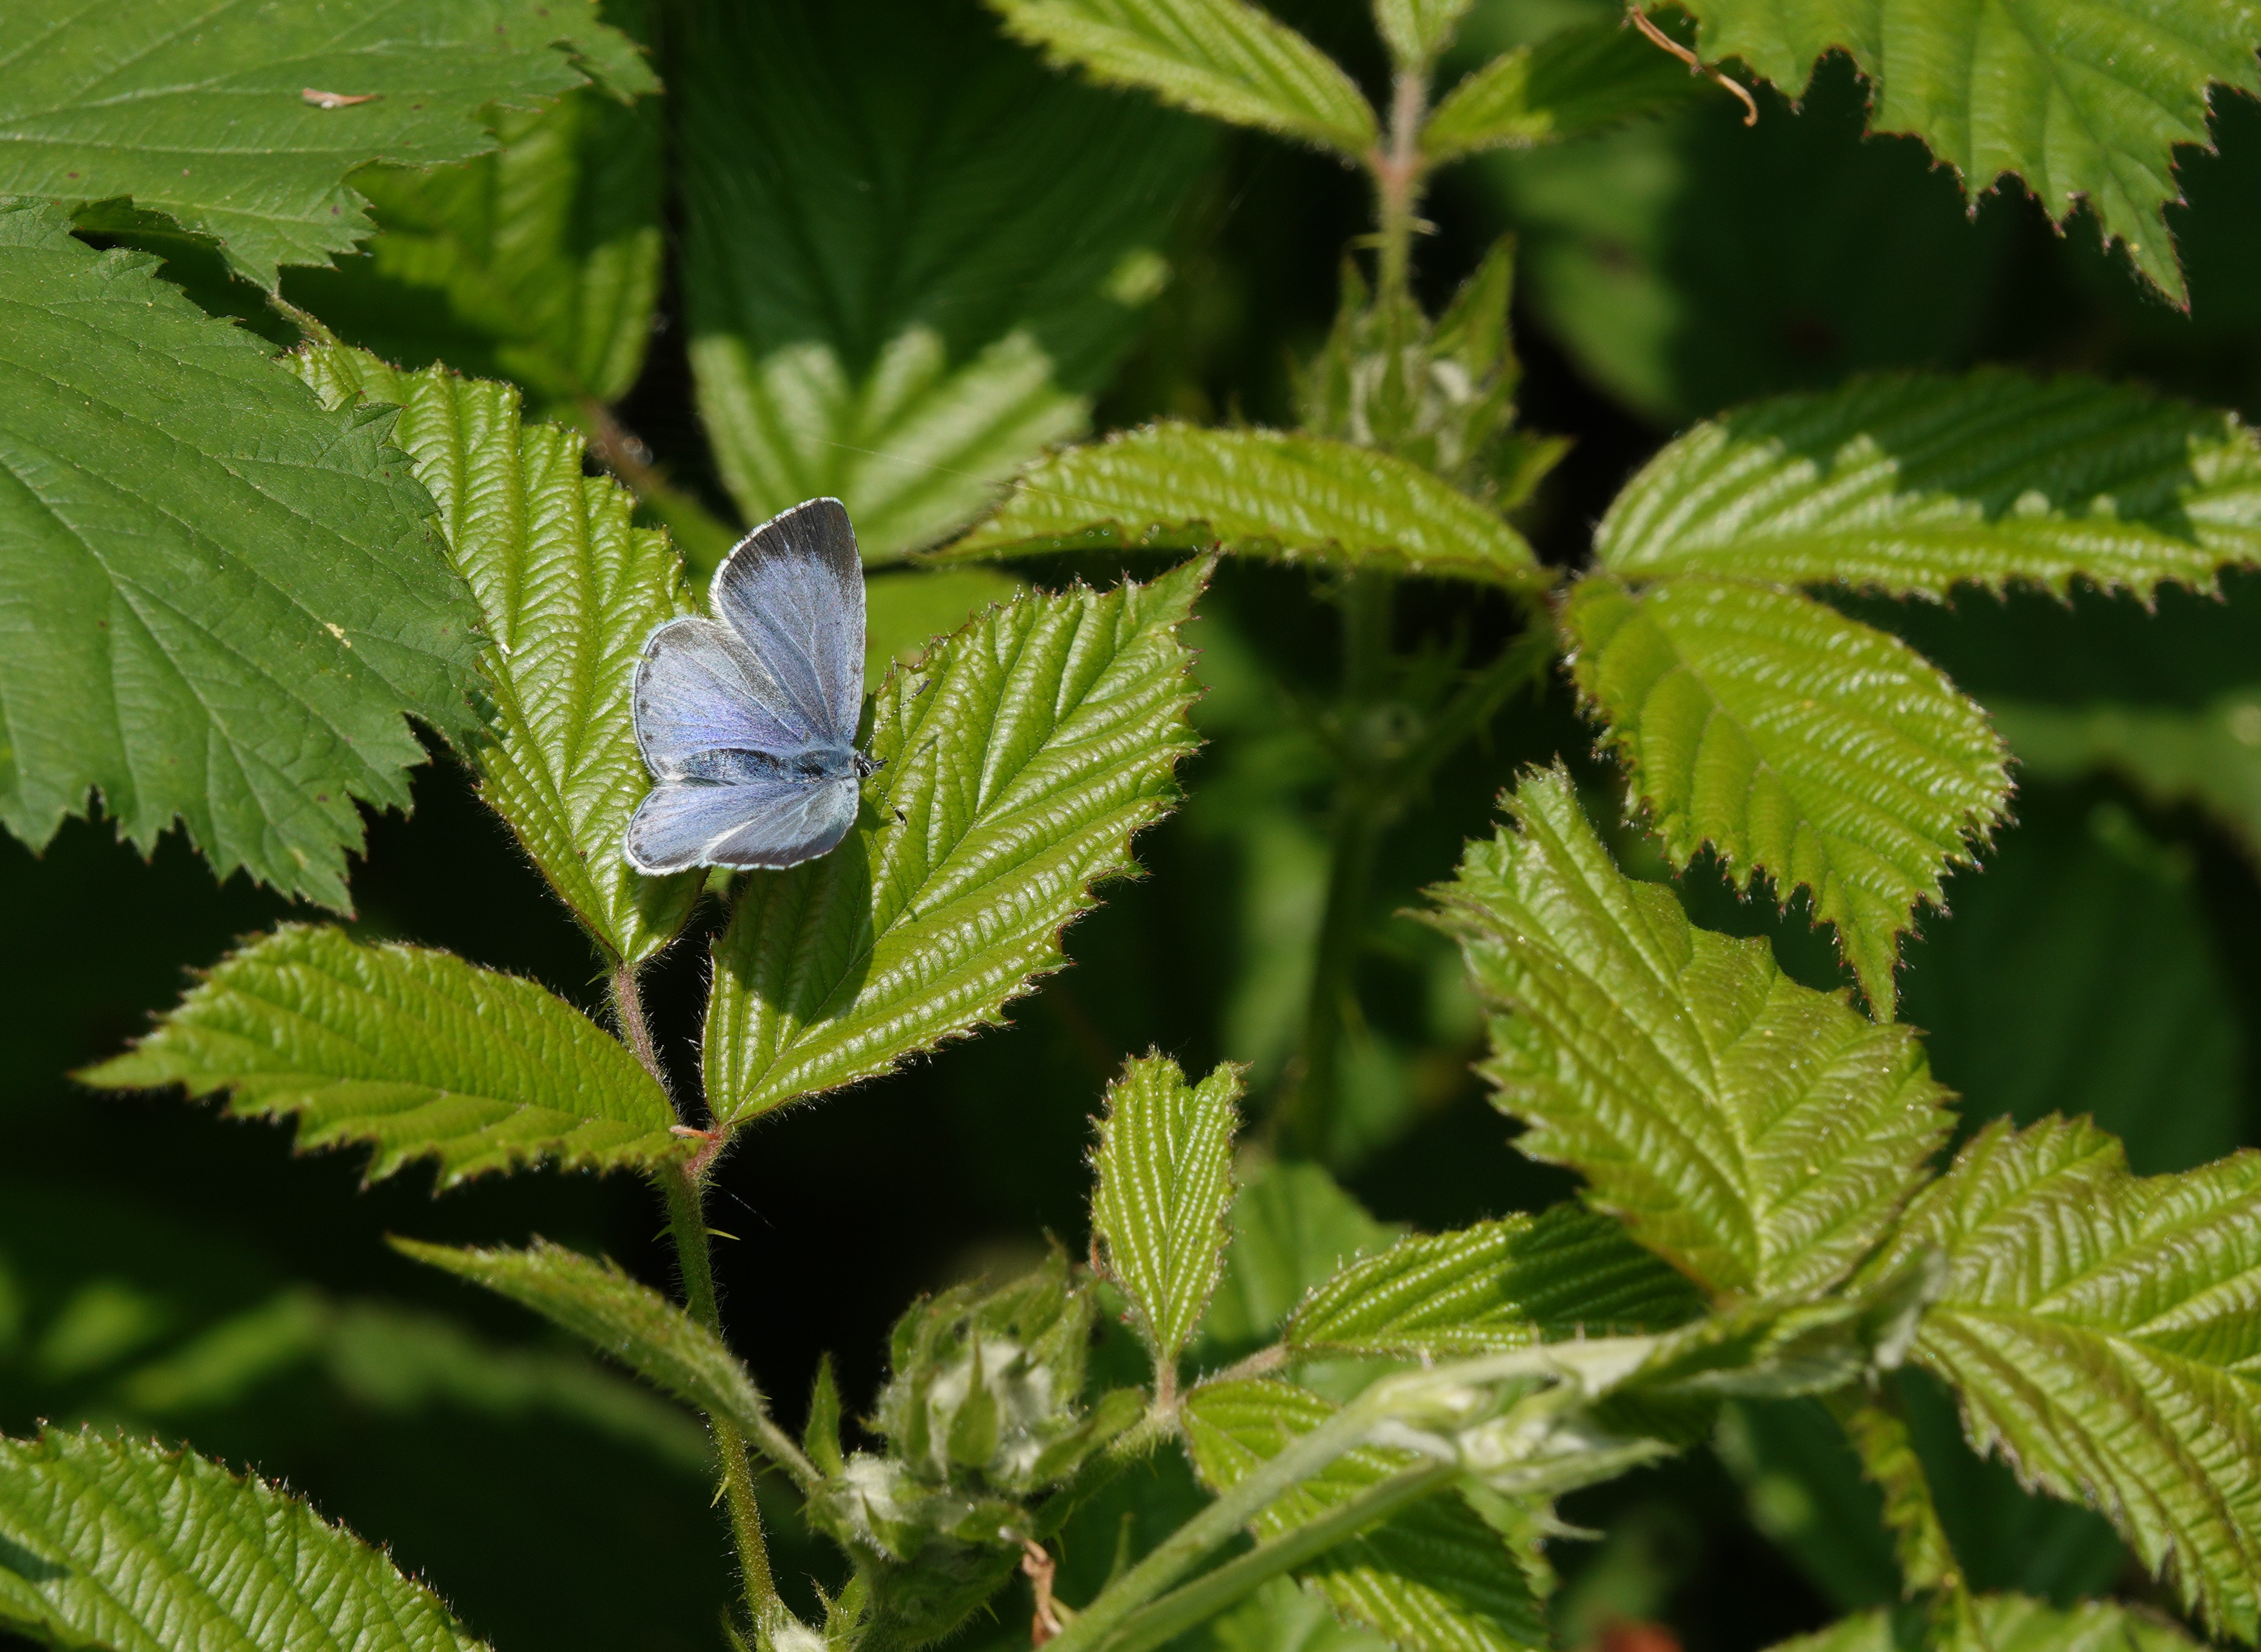 Female Holly Blue basking on bramble leaves